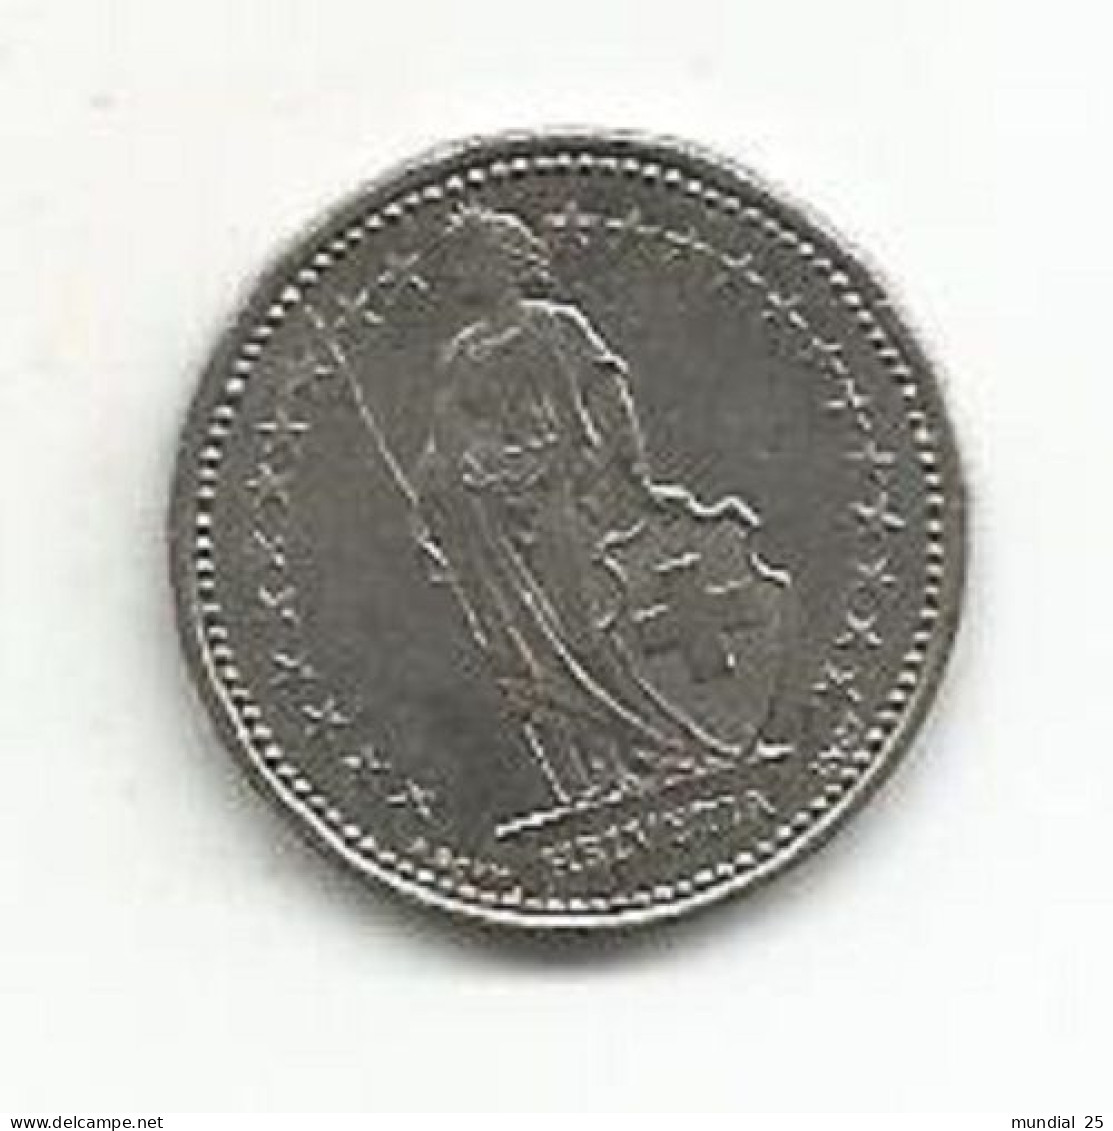 SWITZERLAND 1/2 FRANC 1984 - 1/2 Franken